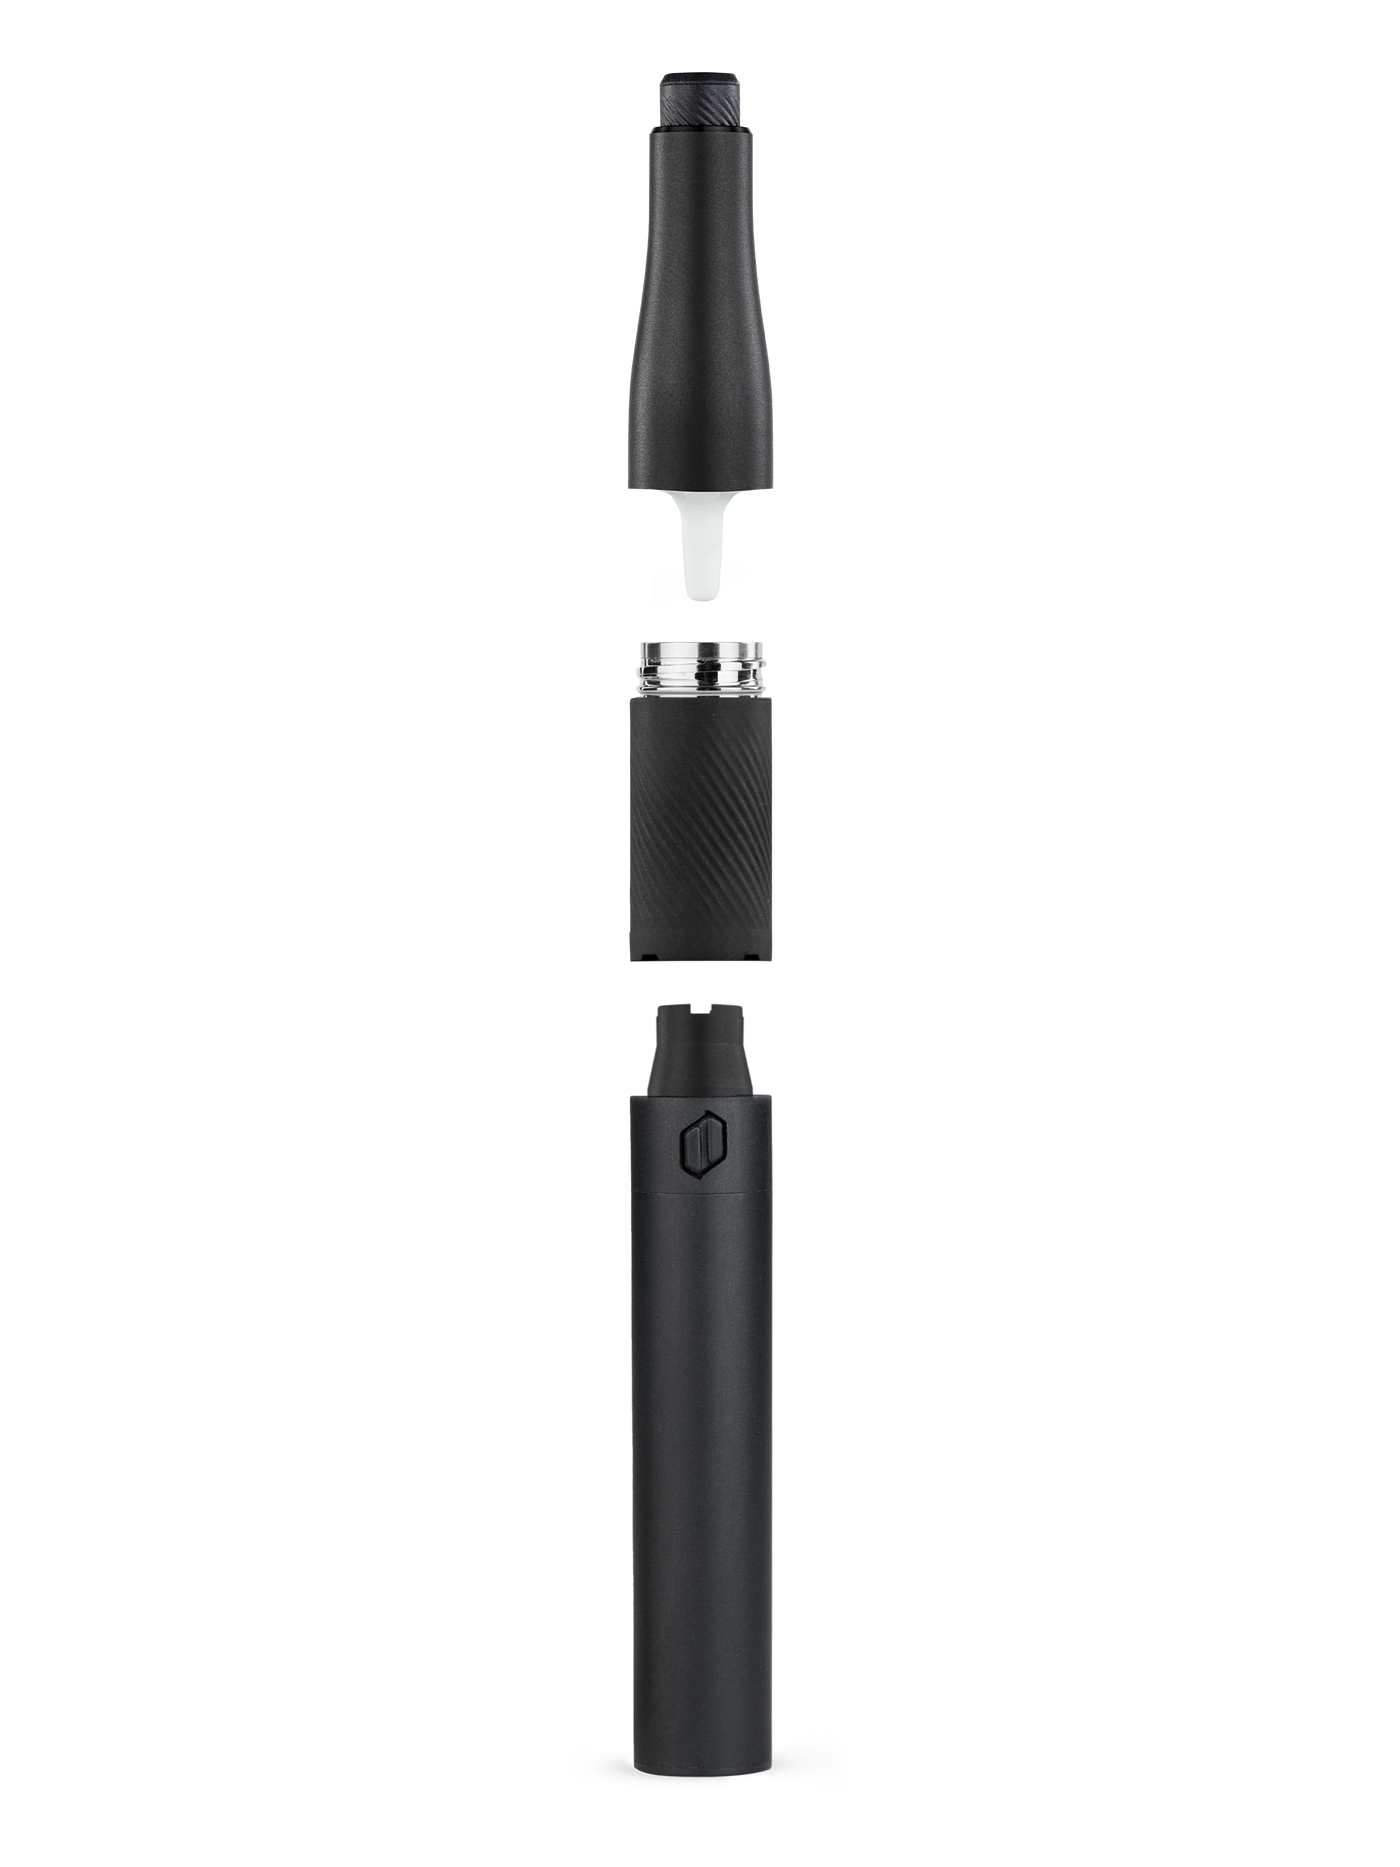 Puffco Plus Wax Pen Vaporizer